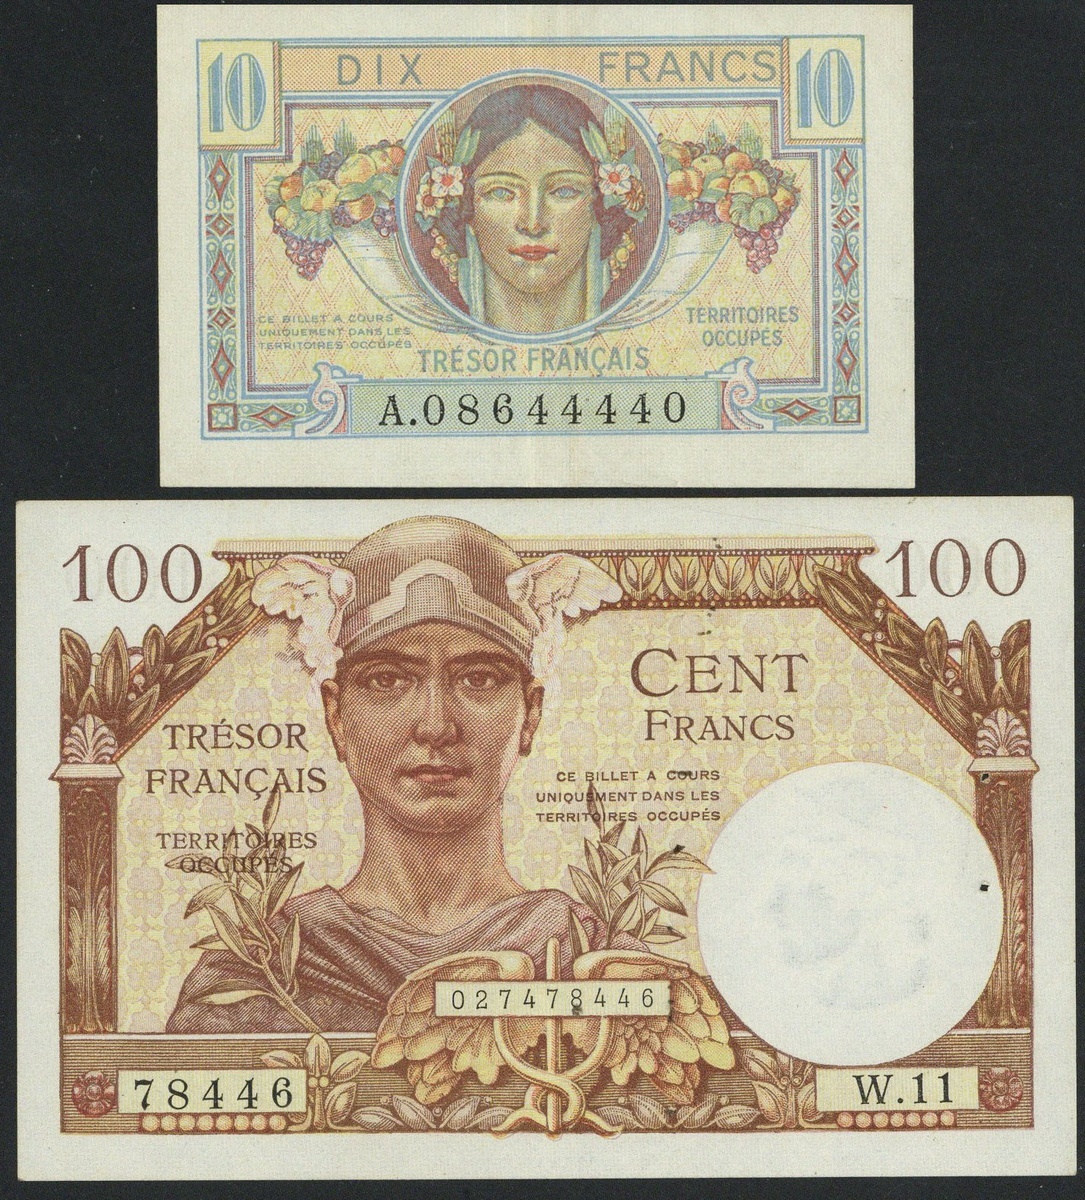 France, Tresor Francais, 10 francs, serial number A.08644440 and 100 francs, W.1178446, no date...